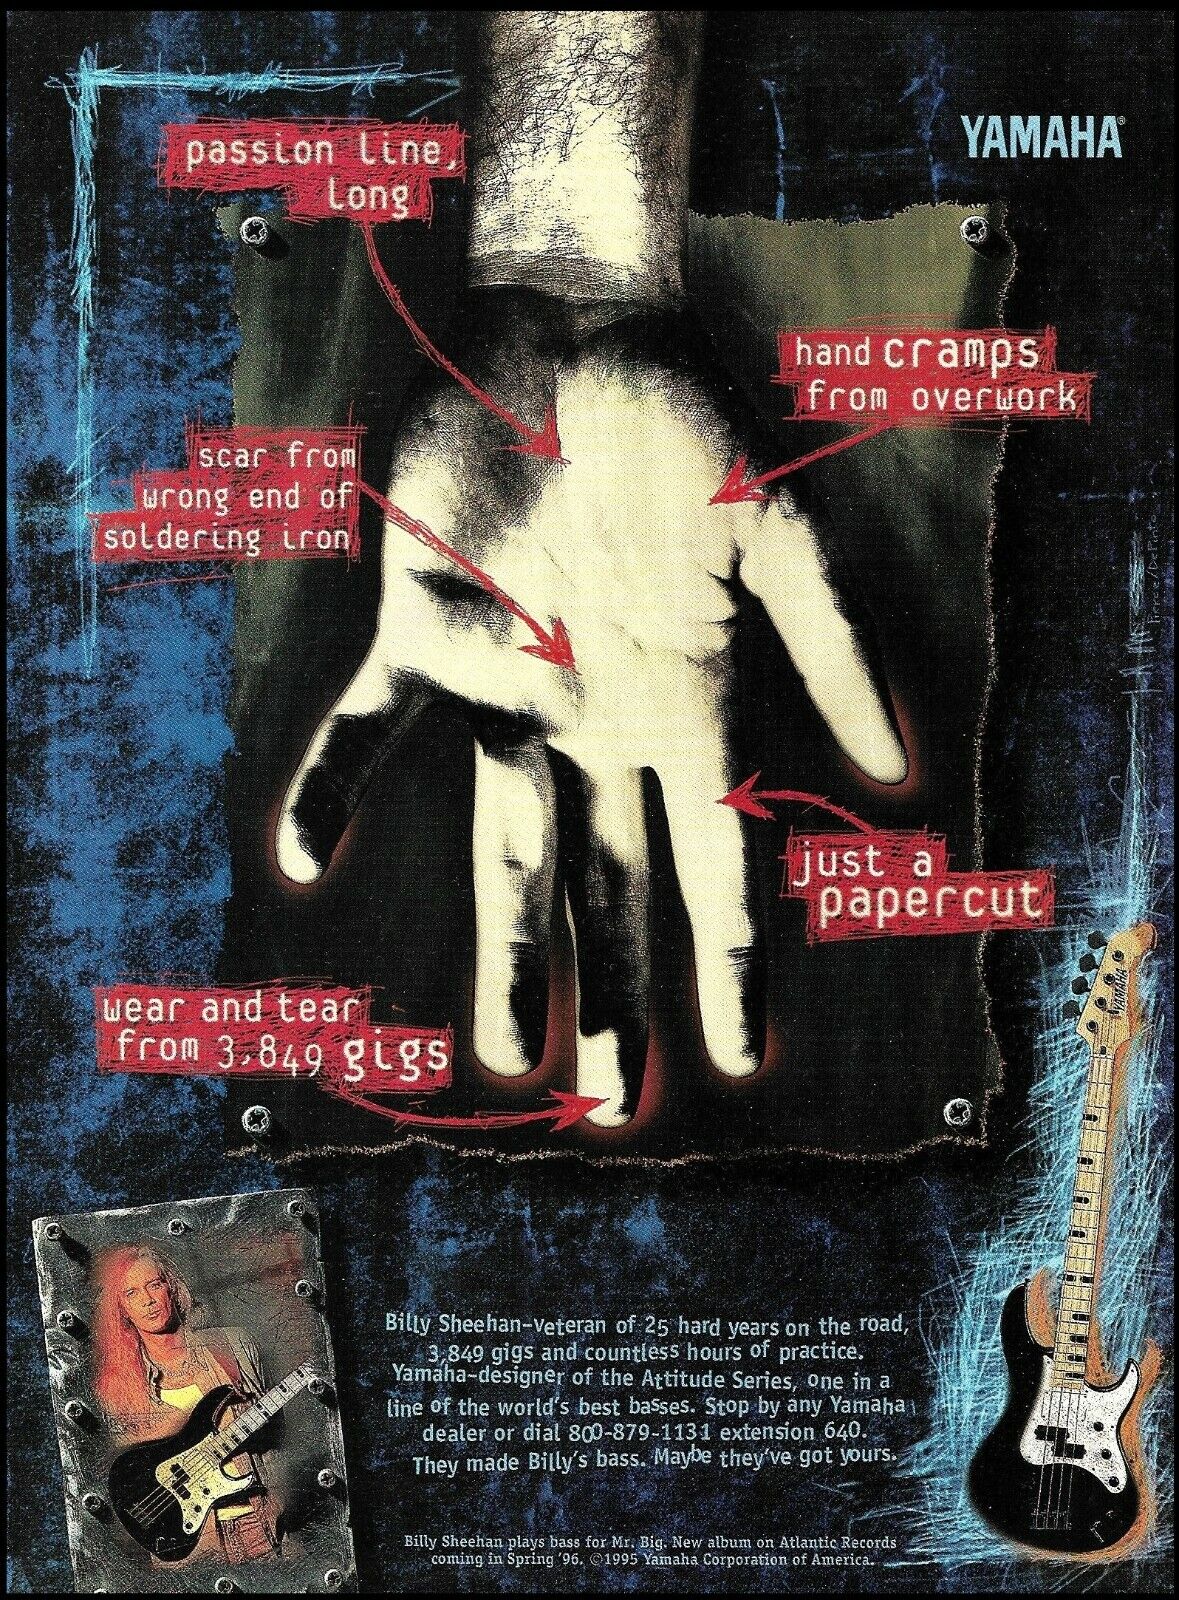 Billy Sheehan 1995 Yamaha Attitude Bass guitar advertisement 8 x 11 ad print